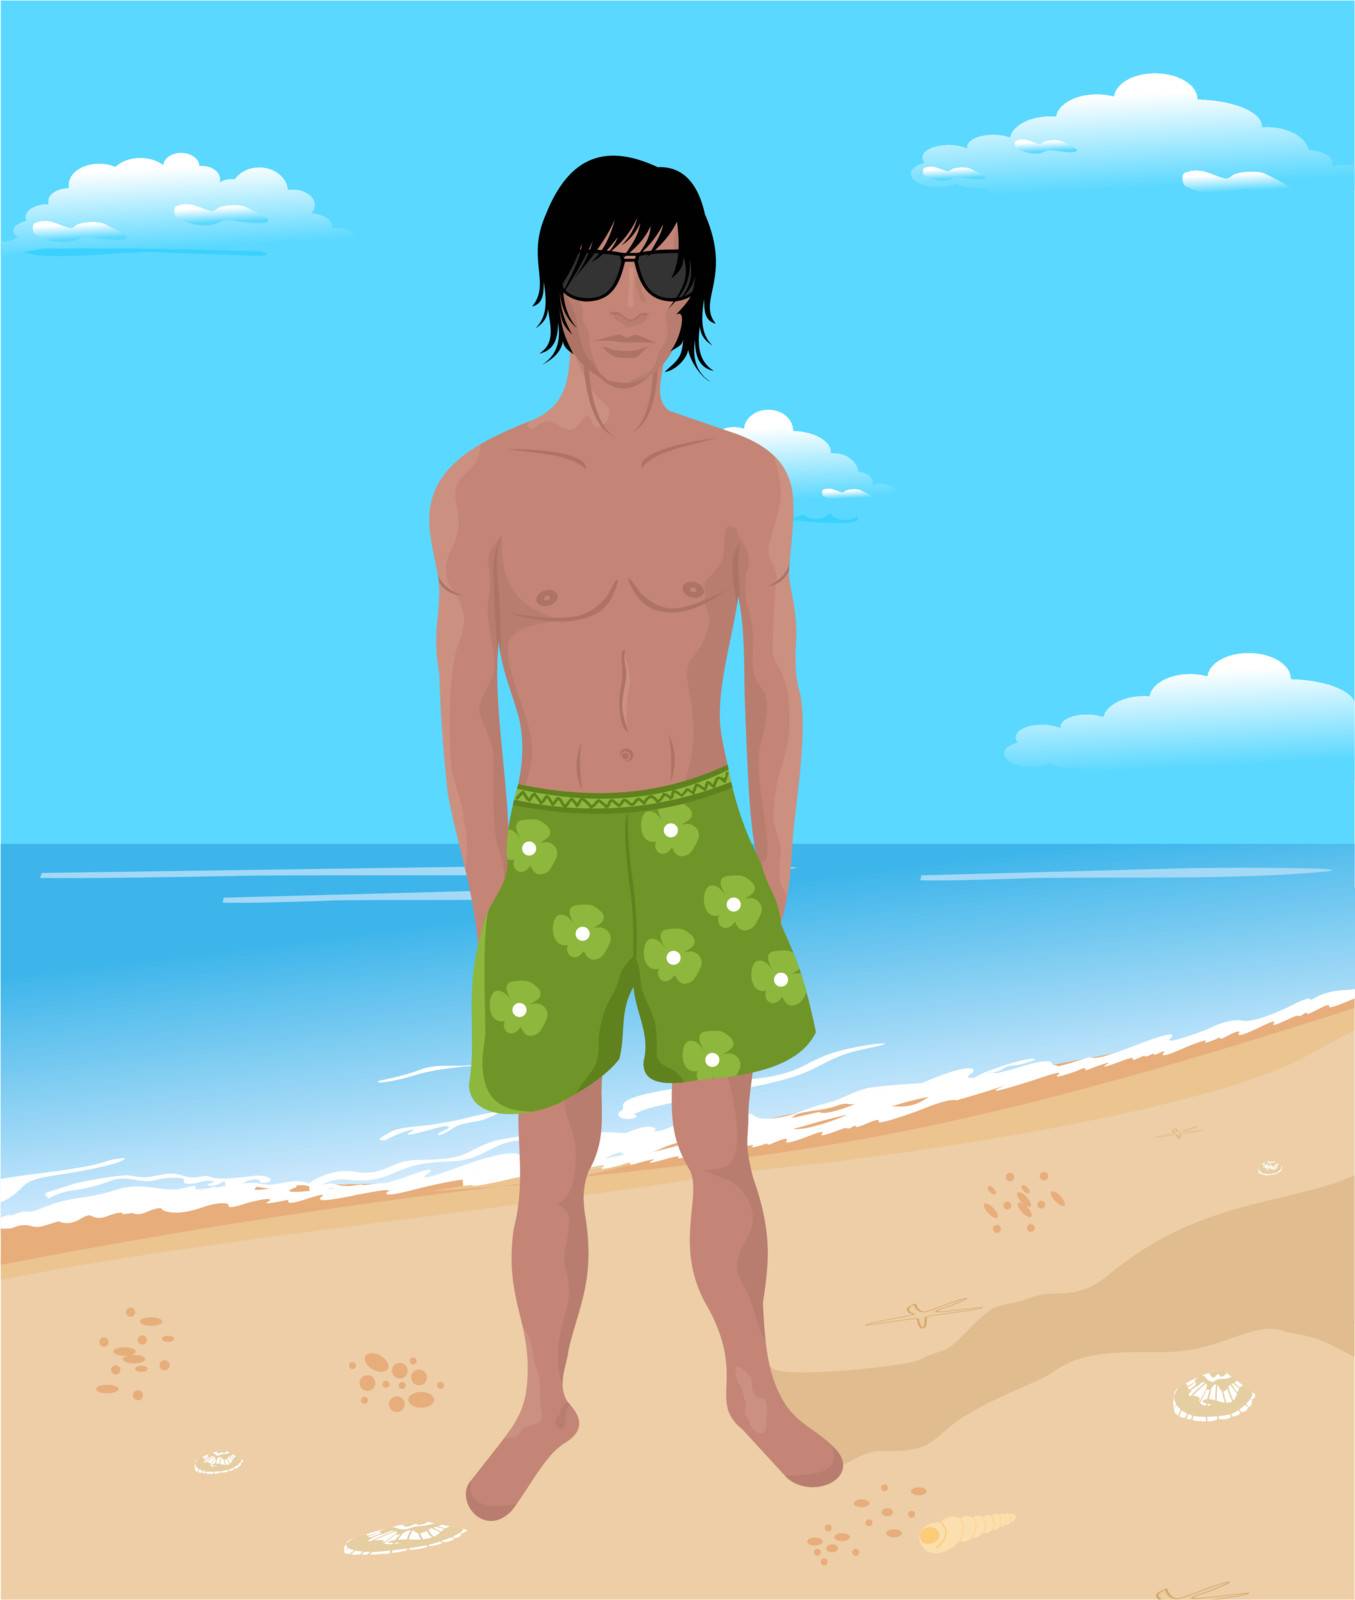 Illustration brawny man on beach - vector